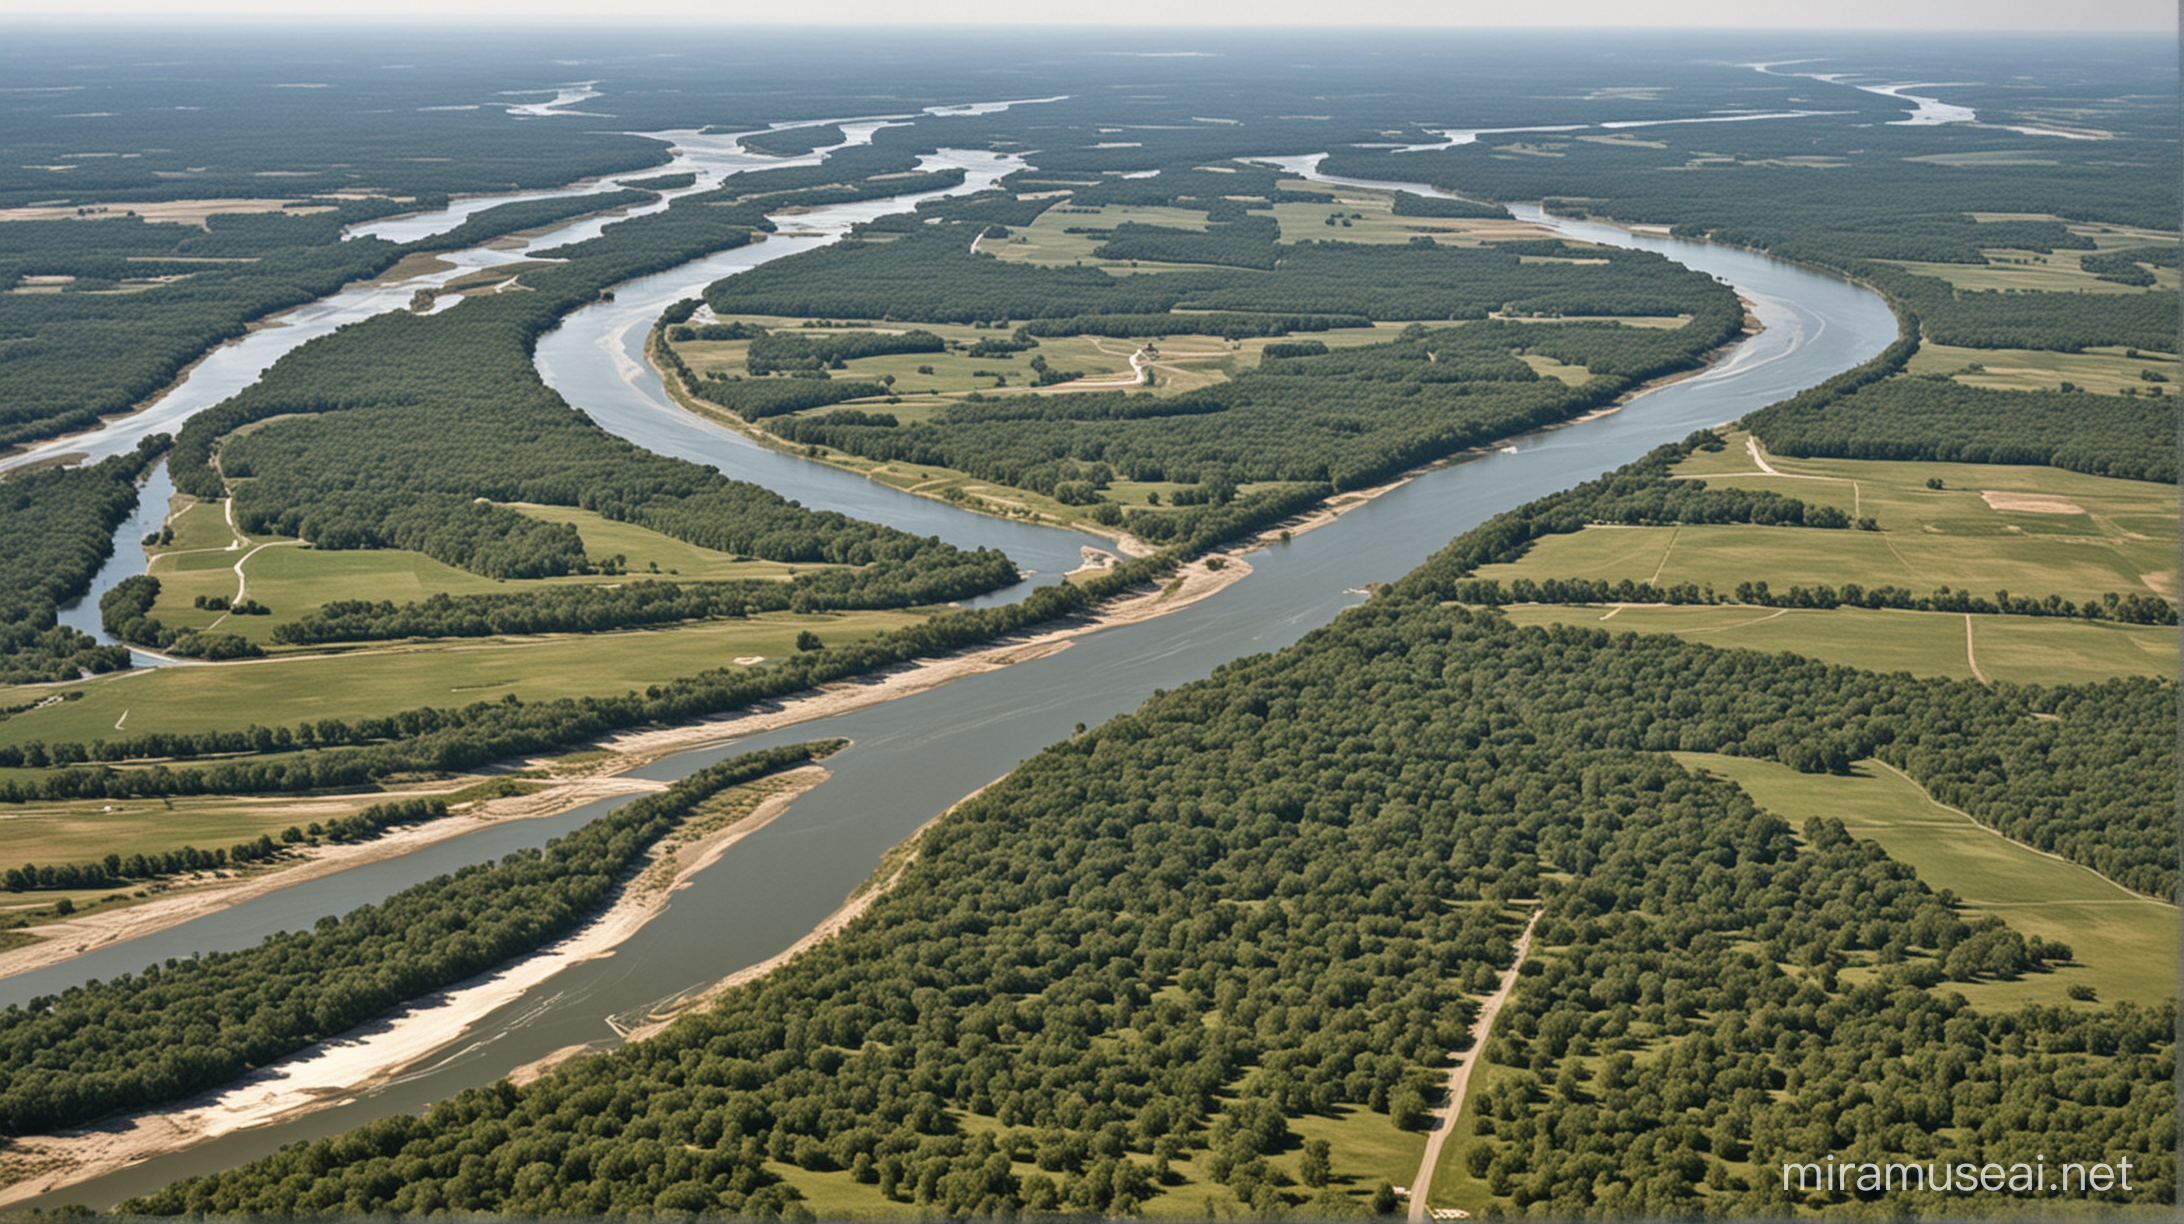 Scenic MississippiMissouri River System Landscape